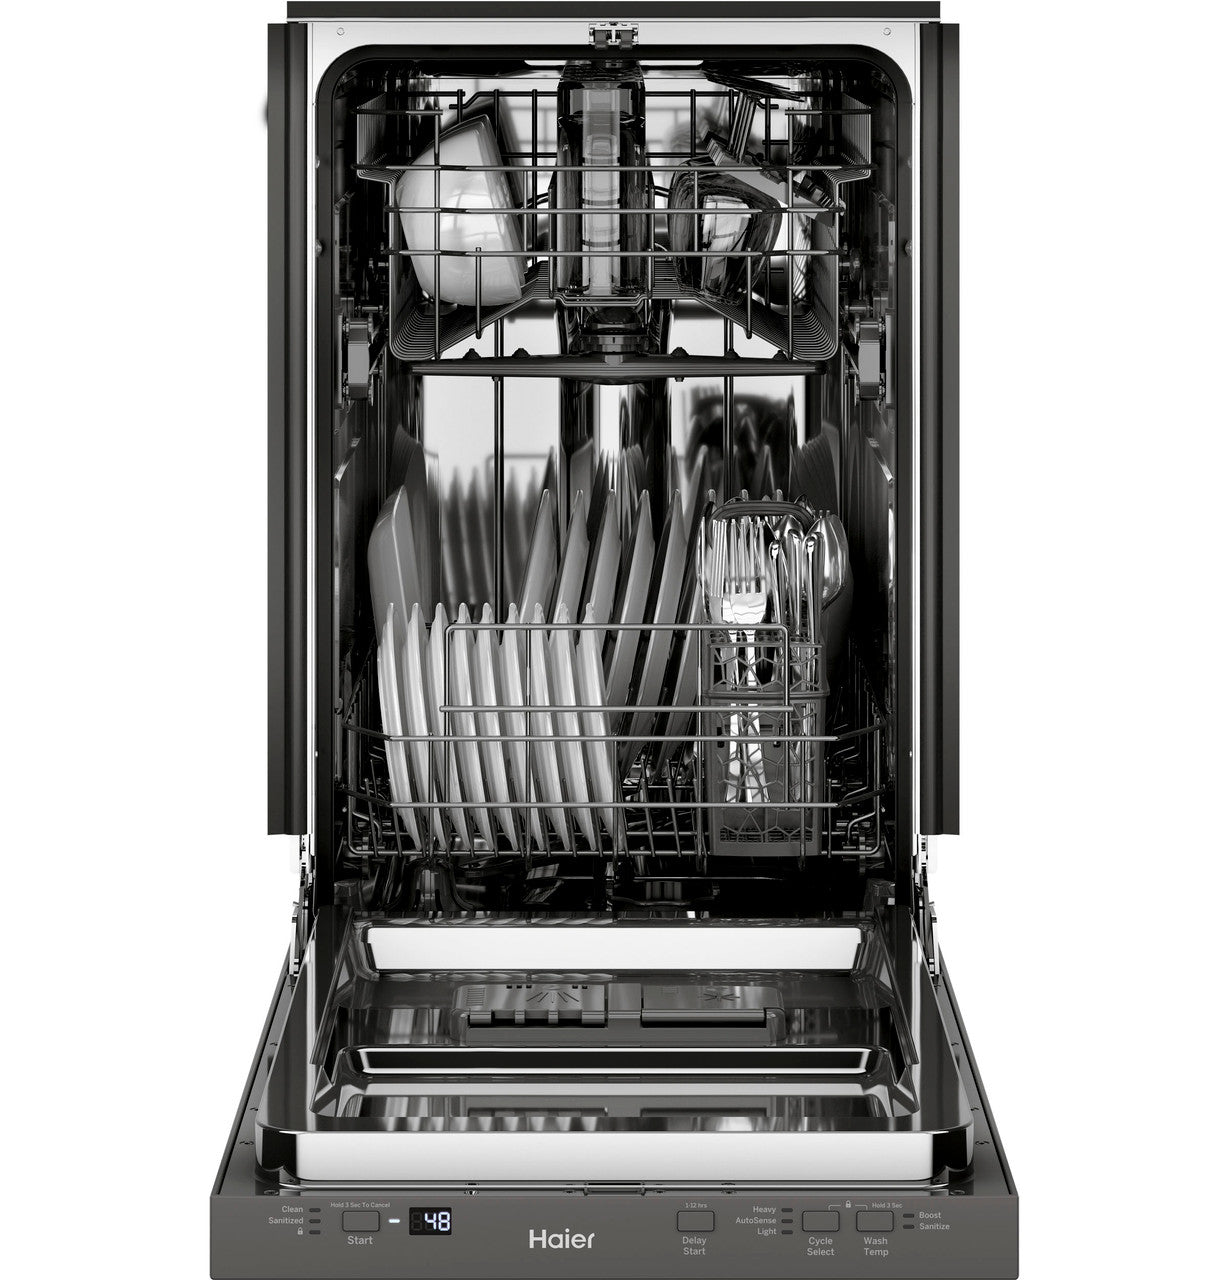 Haier - 47 dBA Built In Dishwasher in Stainless - QDT125SSLSS